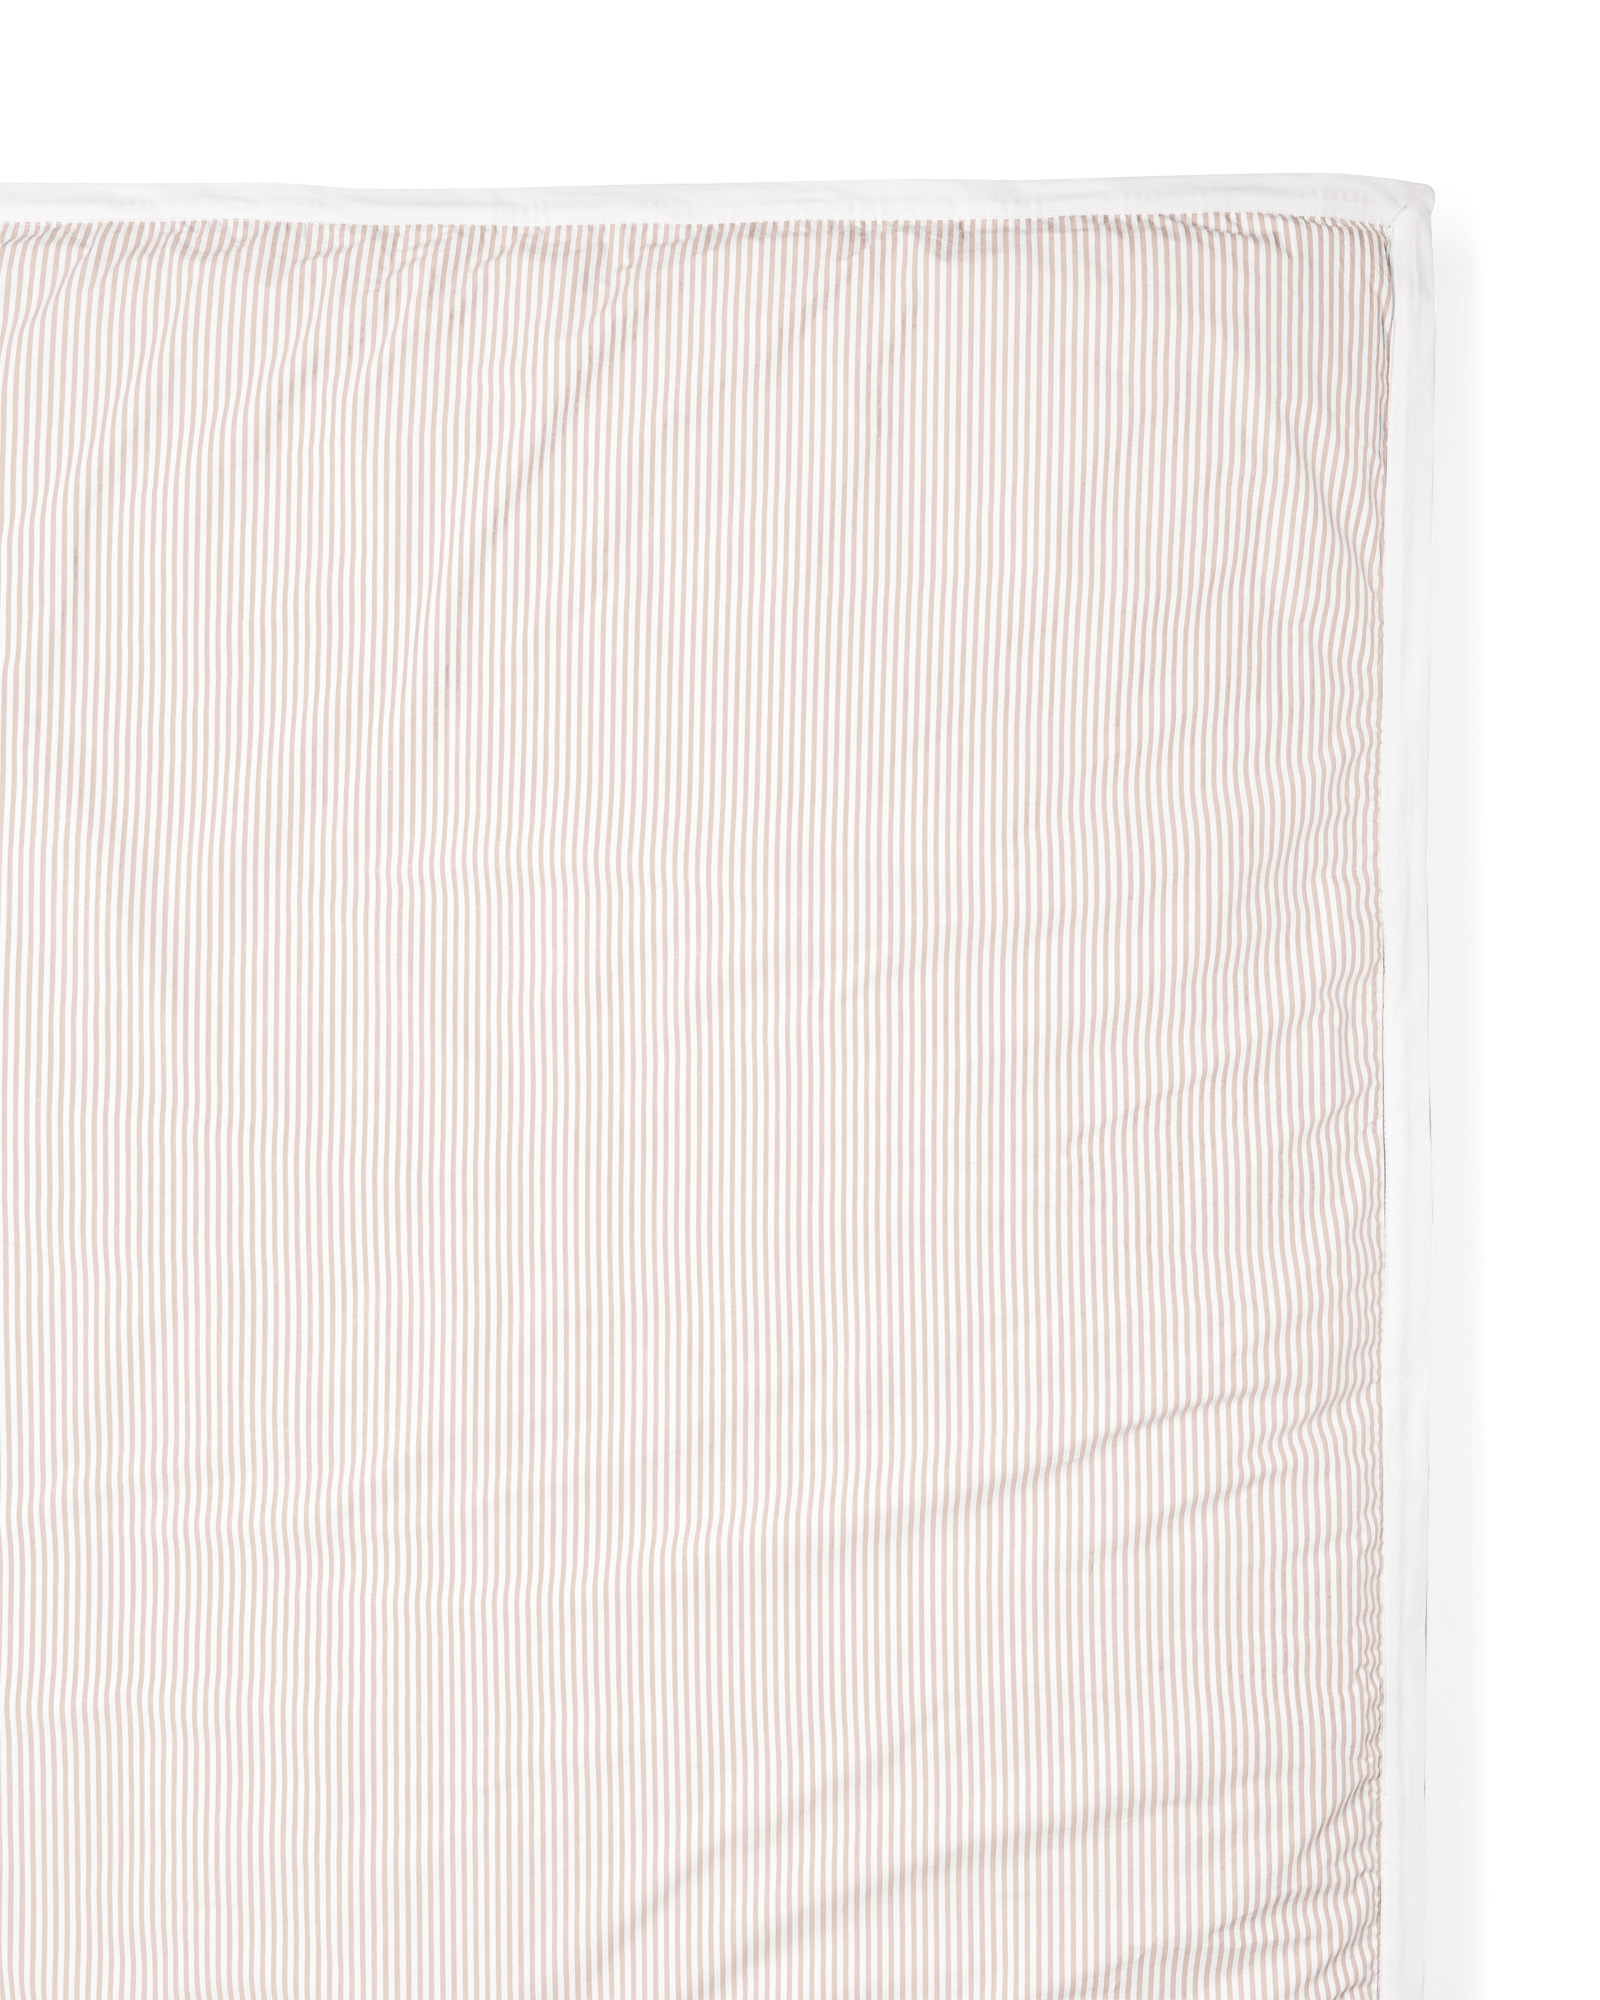 Oxford Stripe Full/Queen Duvet Cover - Pink Sand - Insert sold separately - Image 2